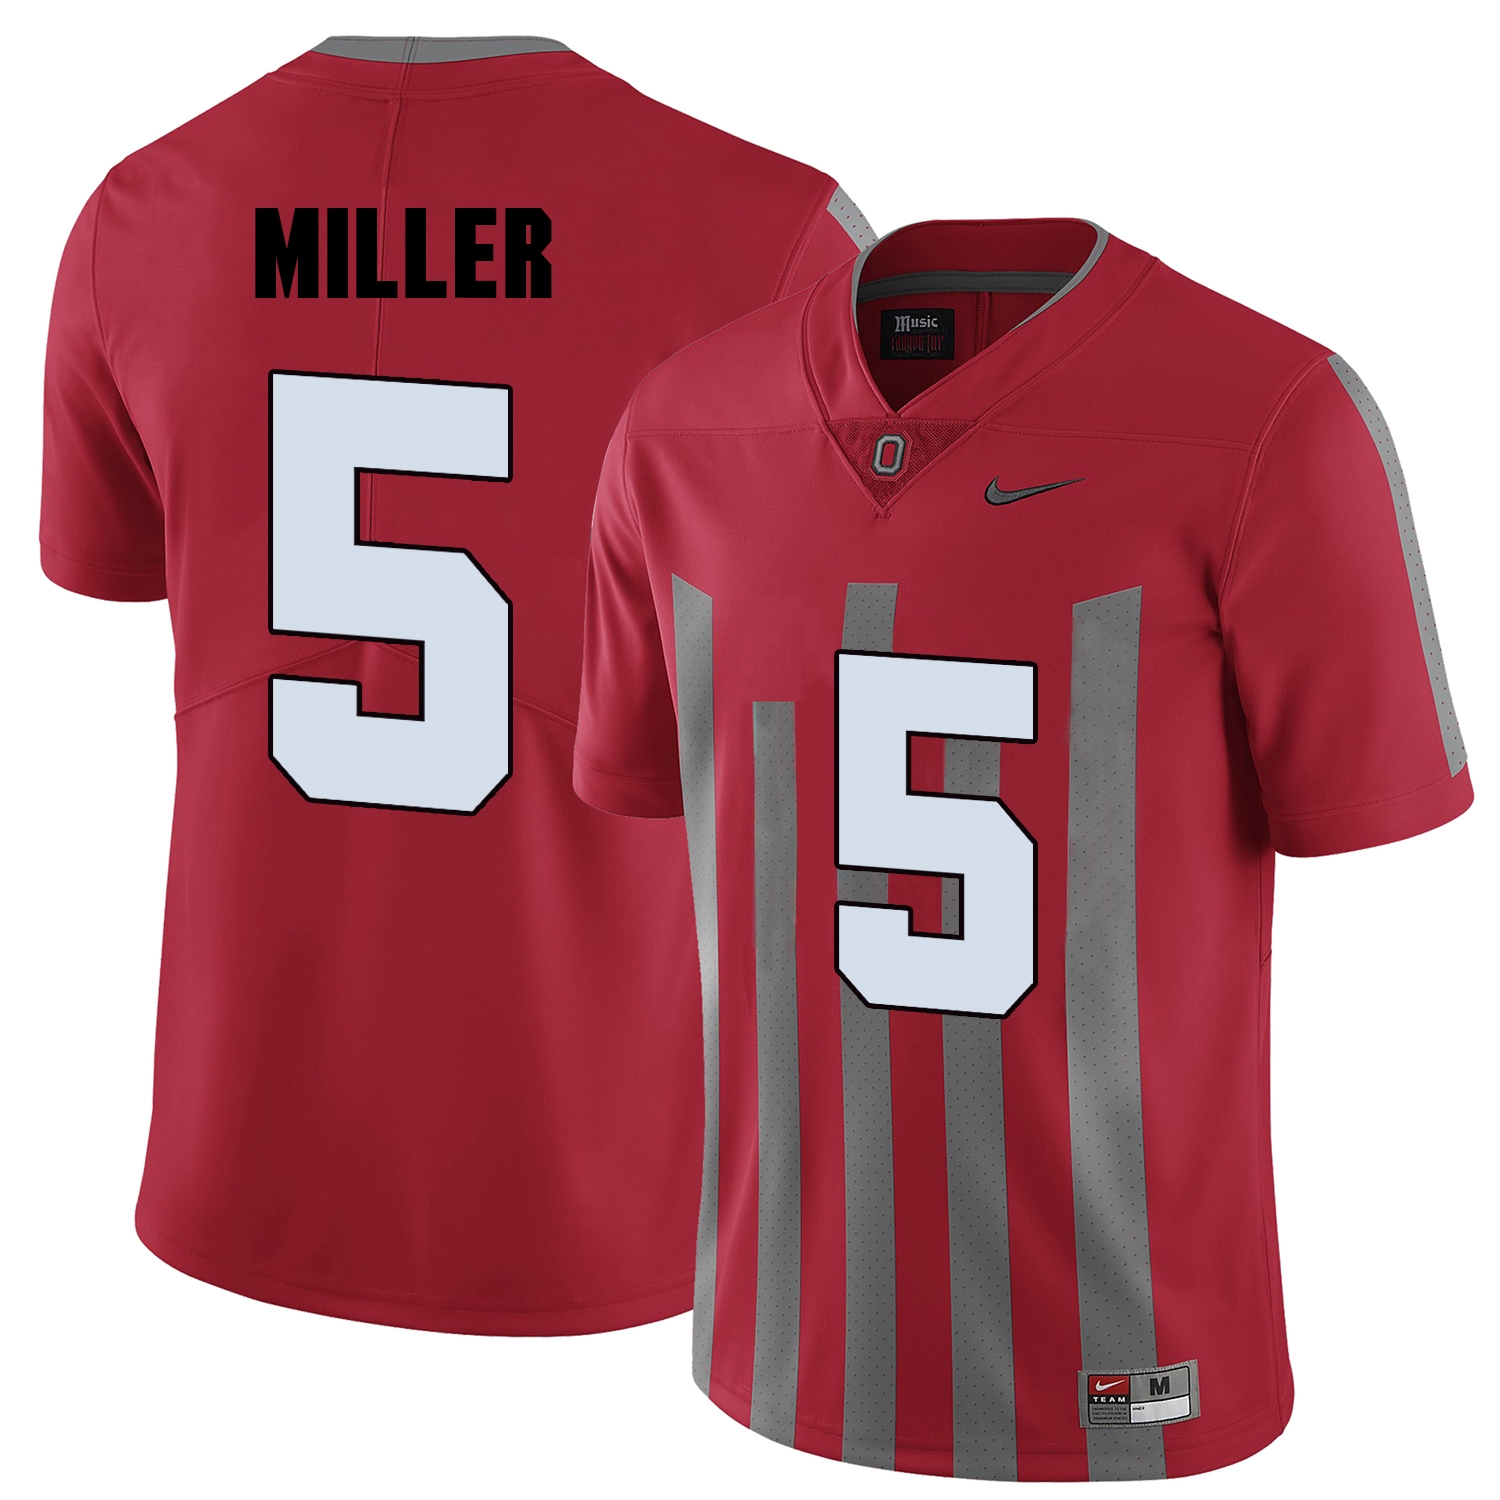 Ohio State Buckeyes Men's NCAA Braxton Miller #5 Red Elite College Football Jersey ZOD1449IN